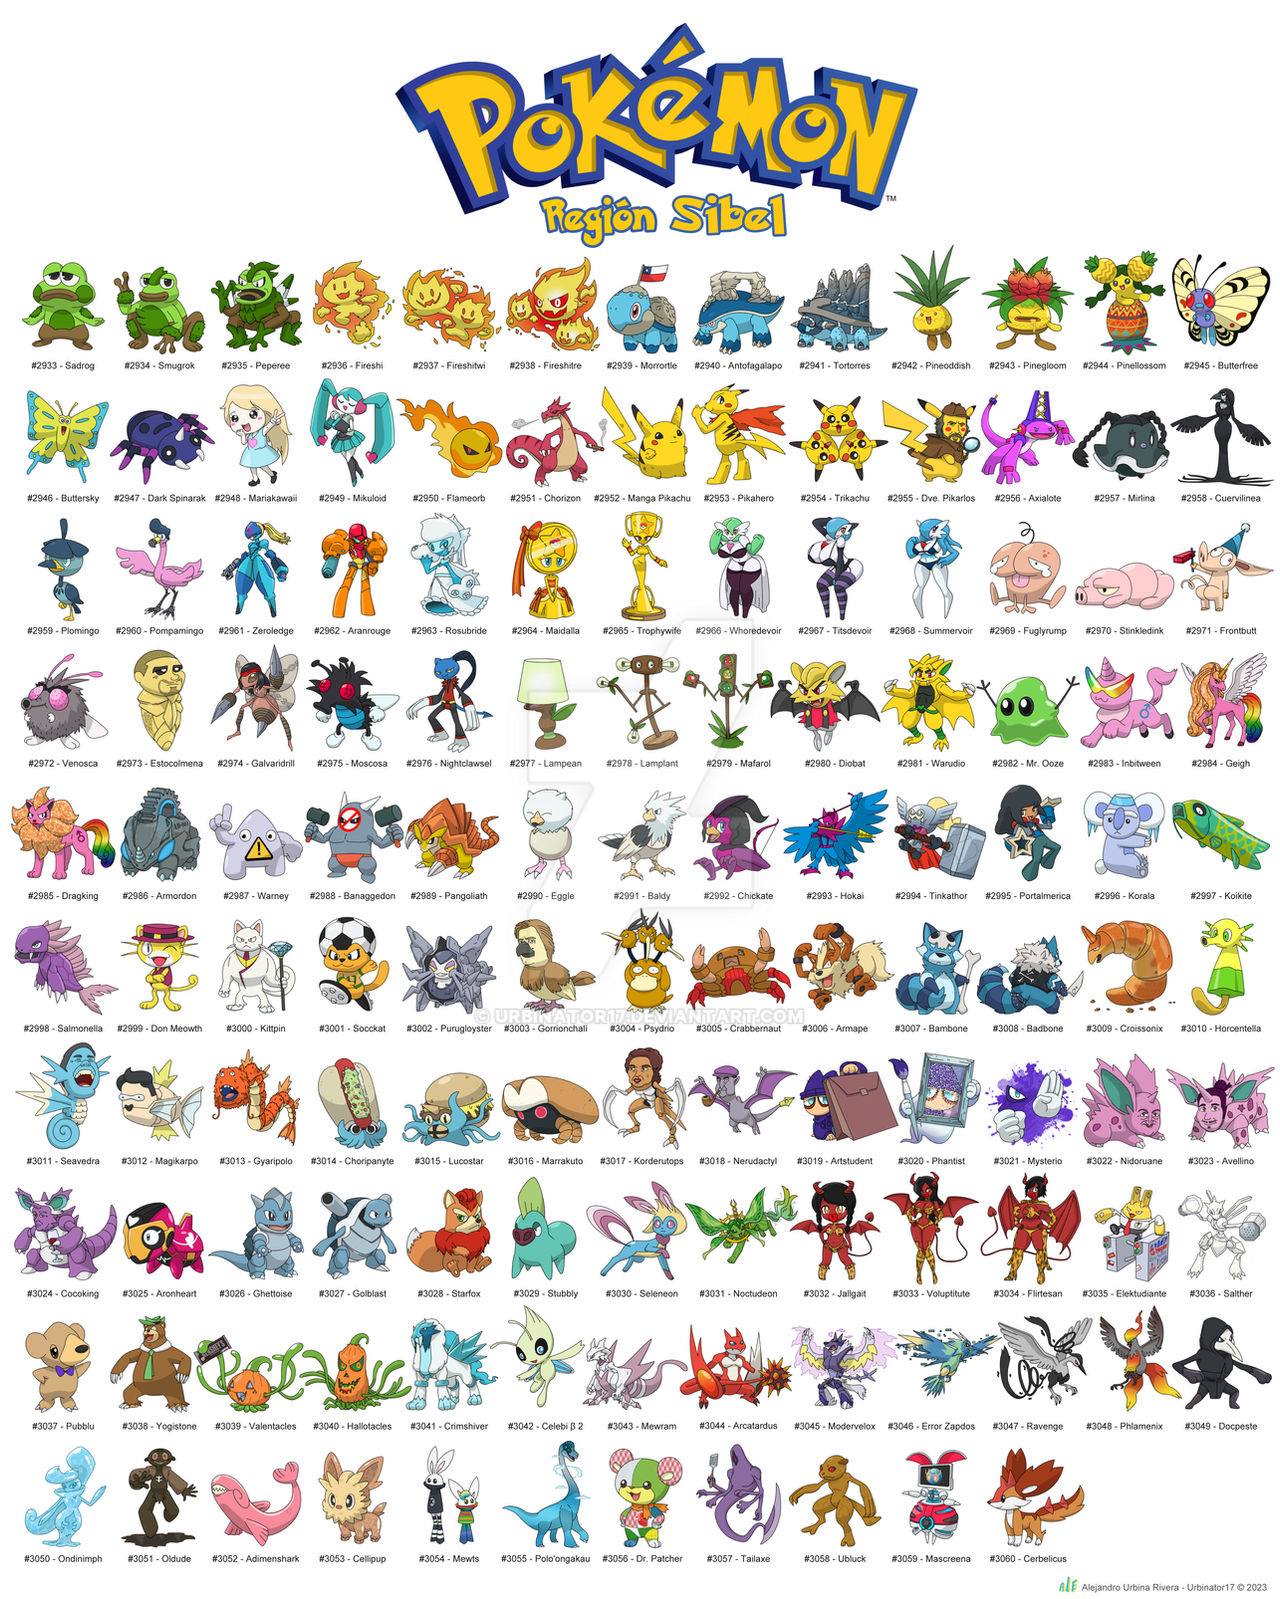 My Pokemon SwSh Gen 8 Pokemon Tierlist by Wildcat1999 on DeviantArt